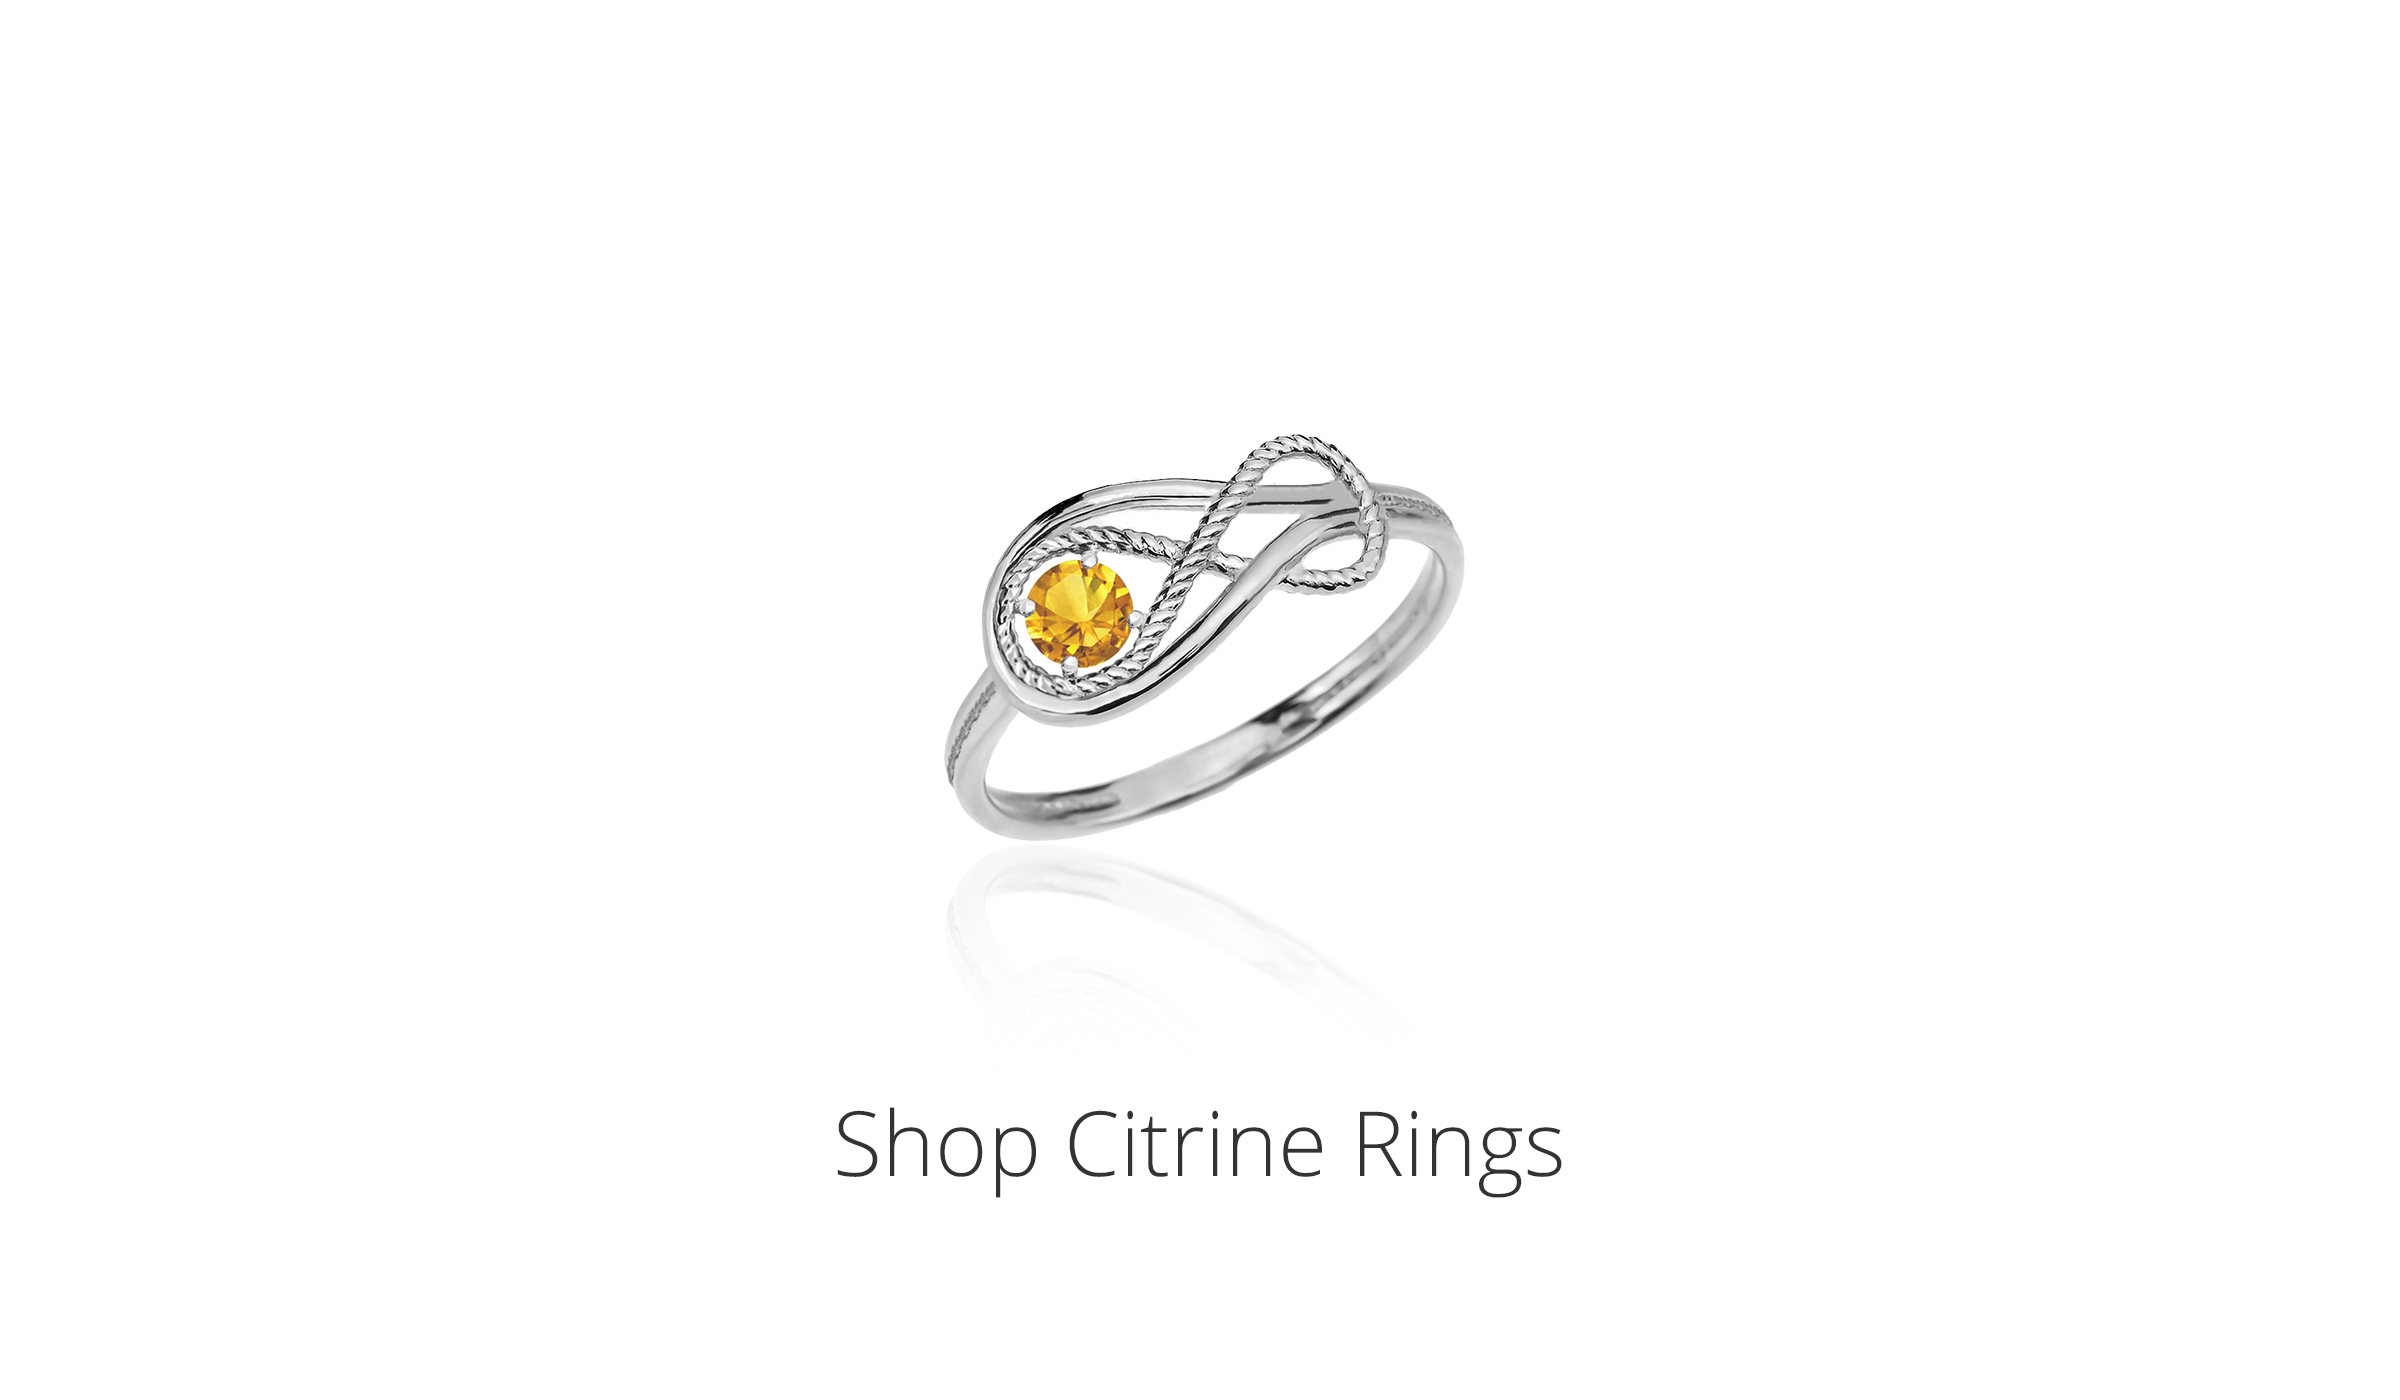 Shop Citrine Rings